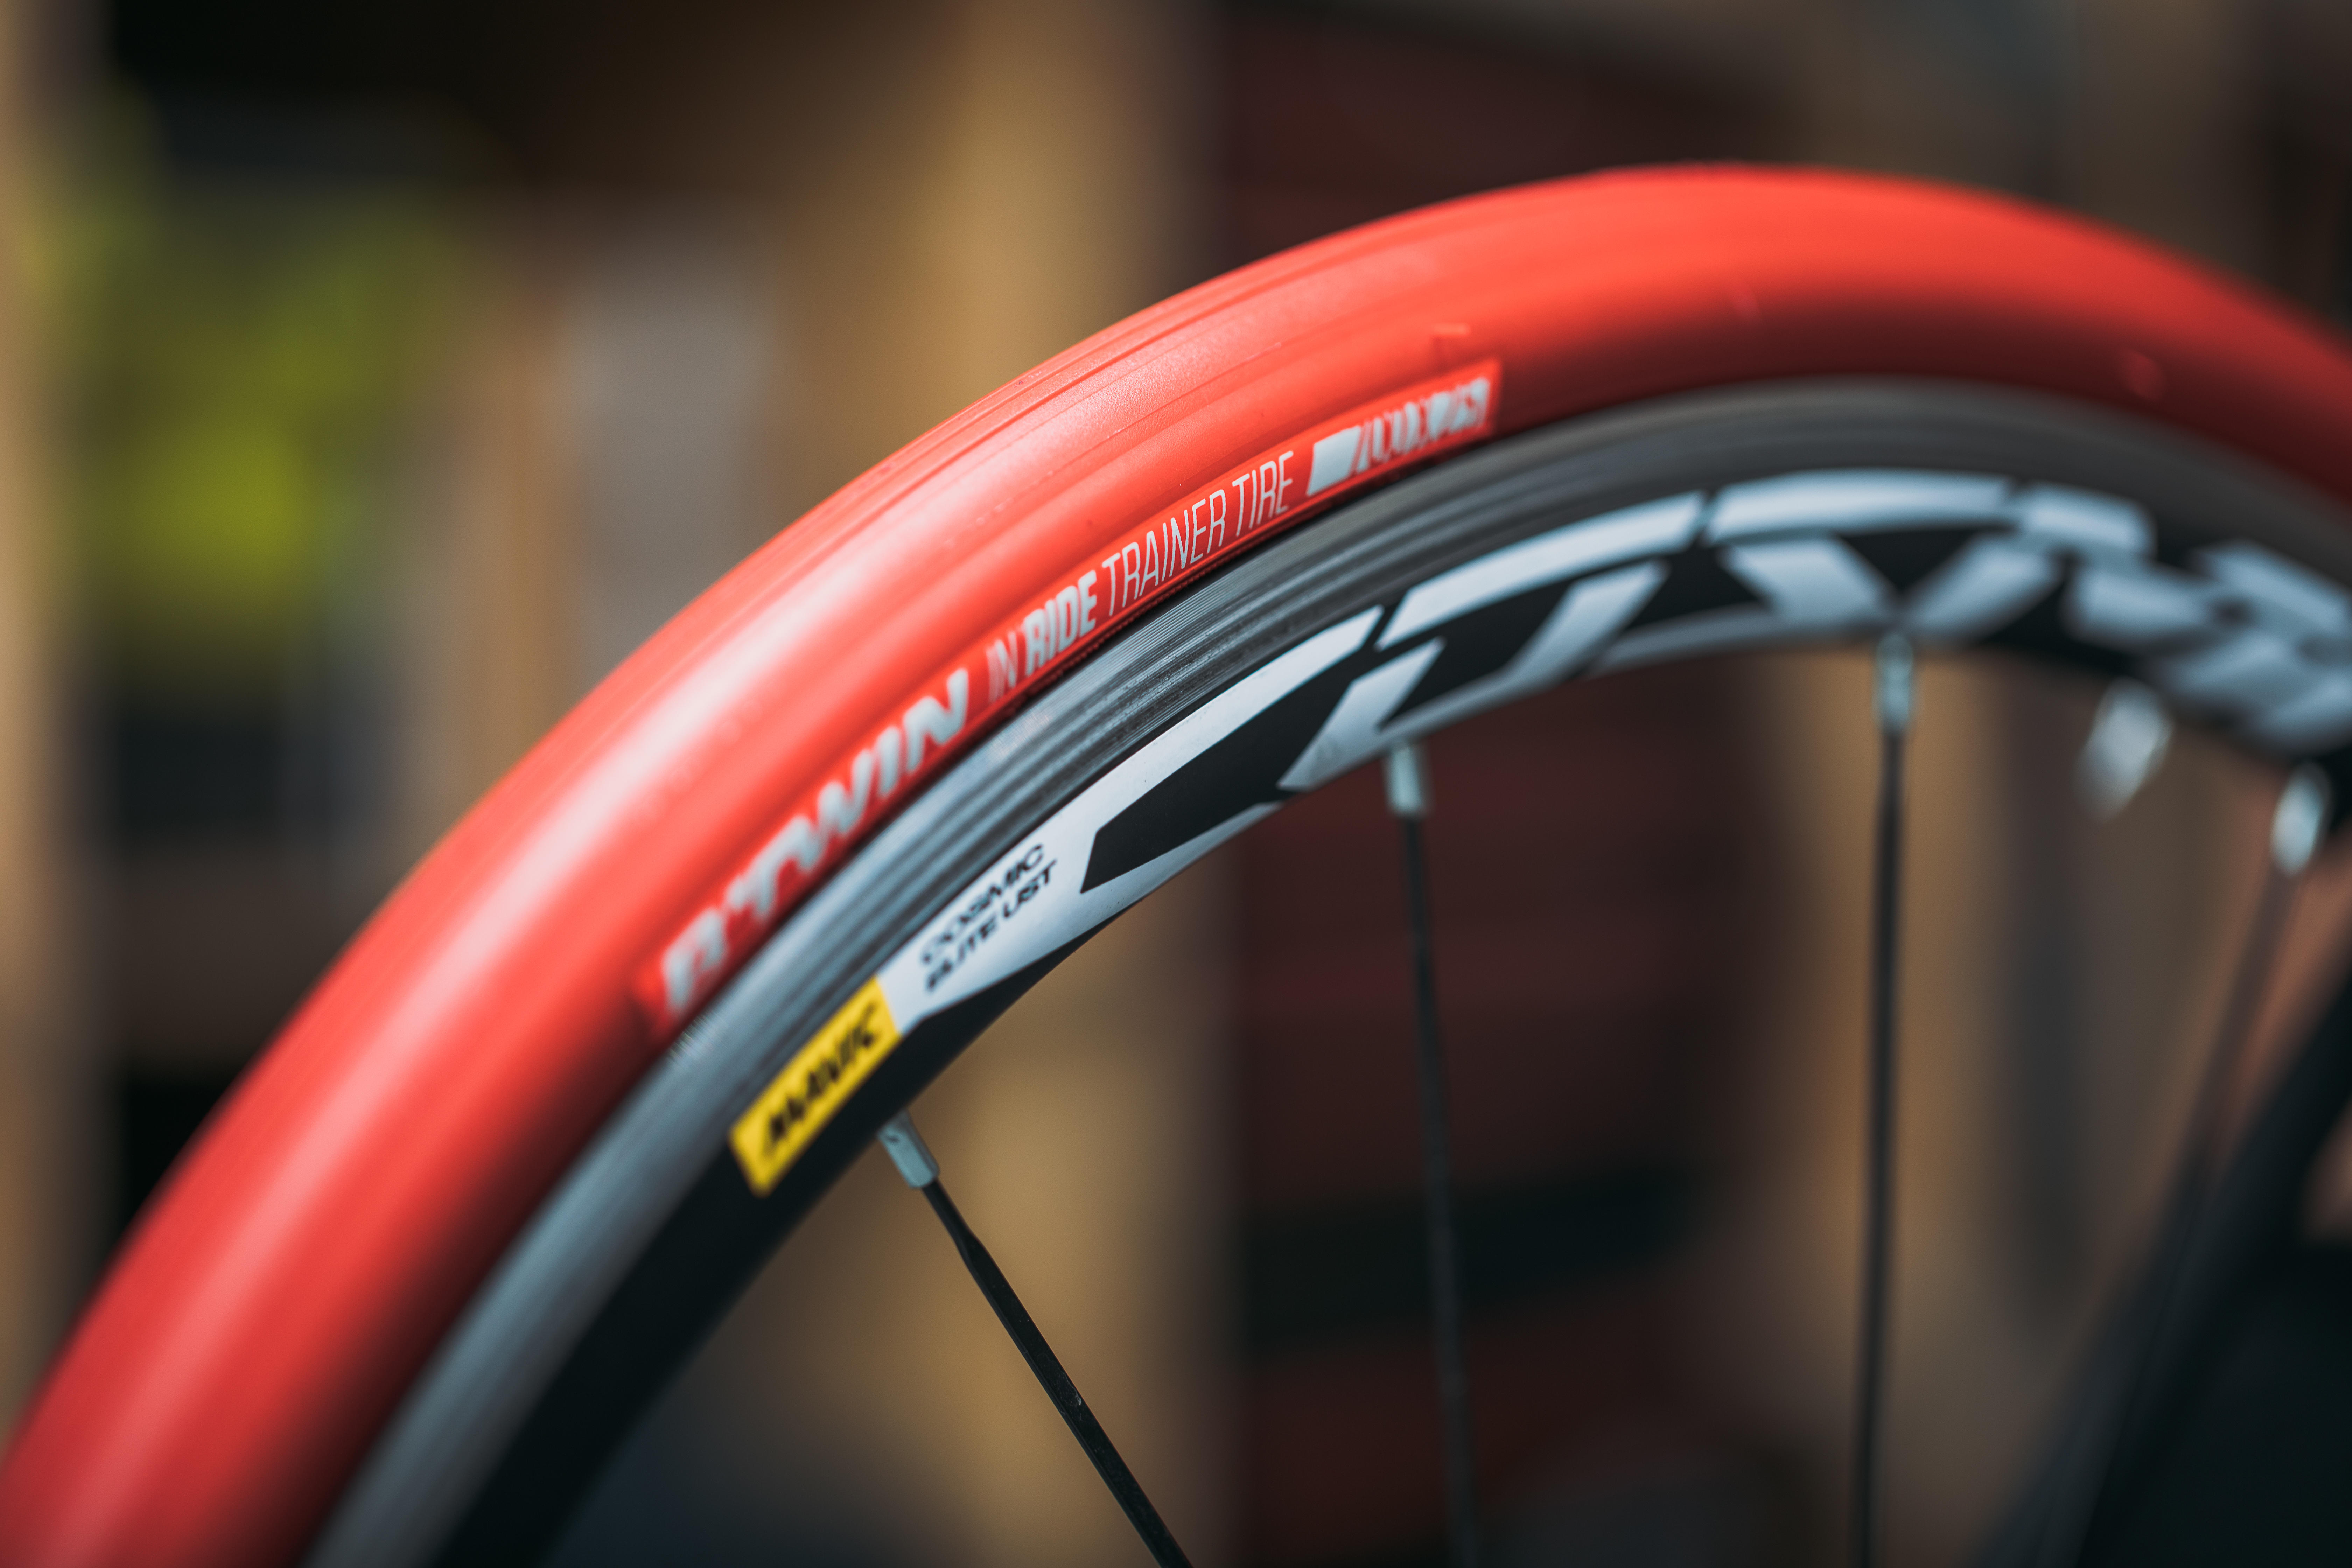 Bike Trainer Tire 700 x 25 c B’Twin - VAN RYSEL